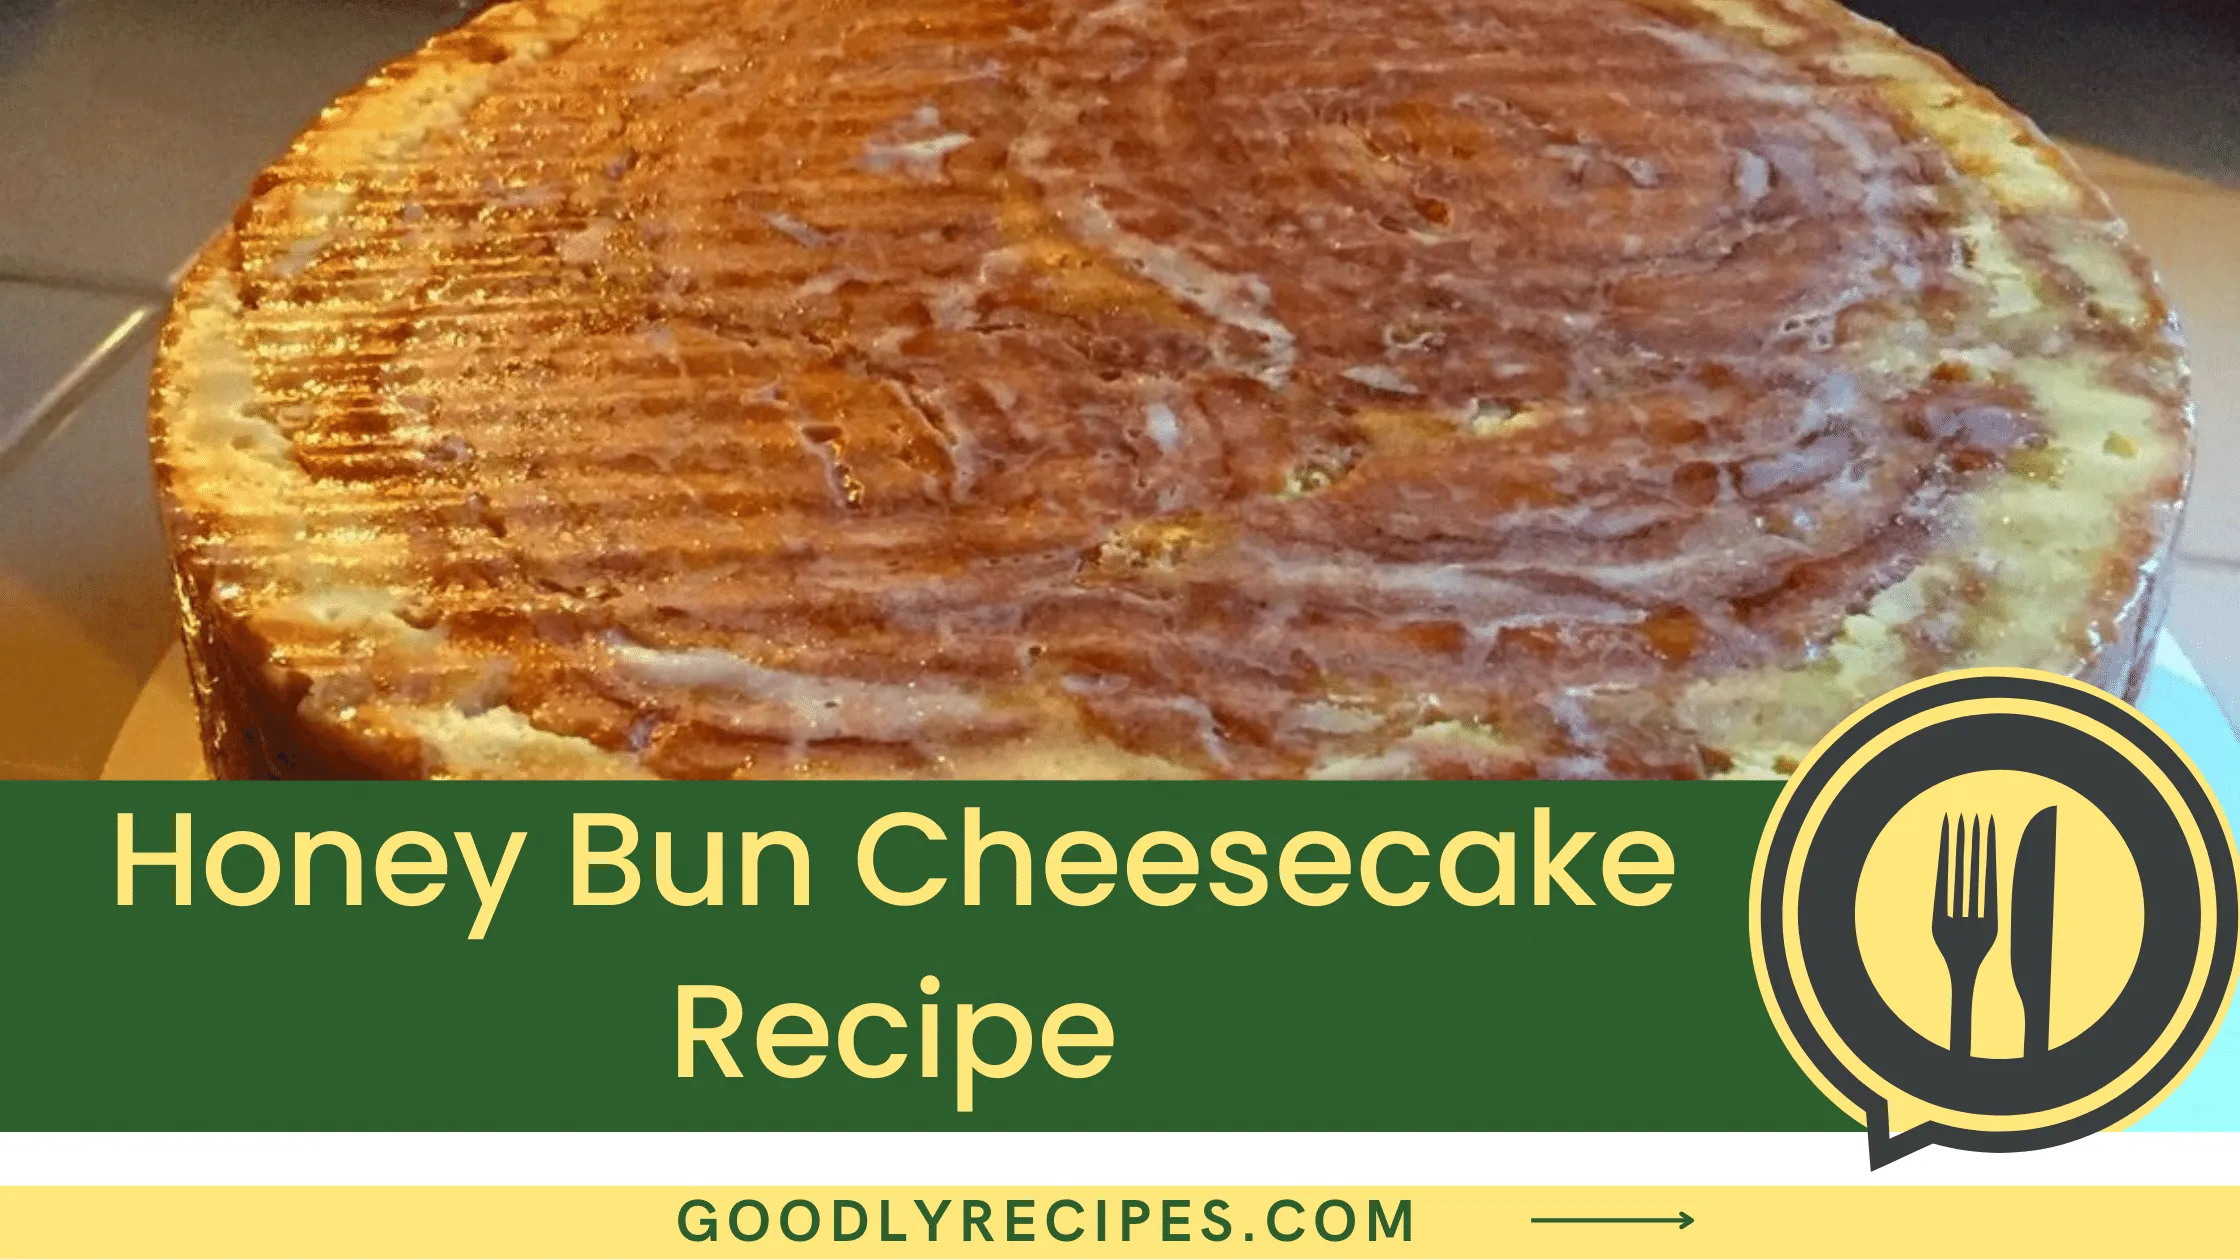 Honey Bun Cheesecake Recipe - For Food Lovers